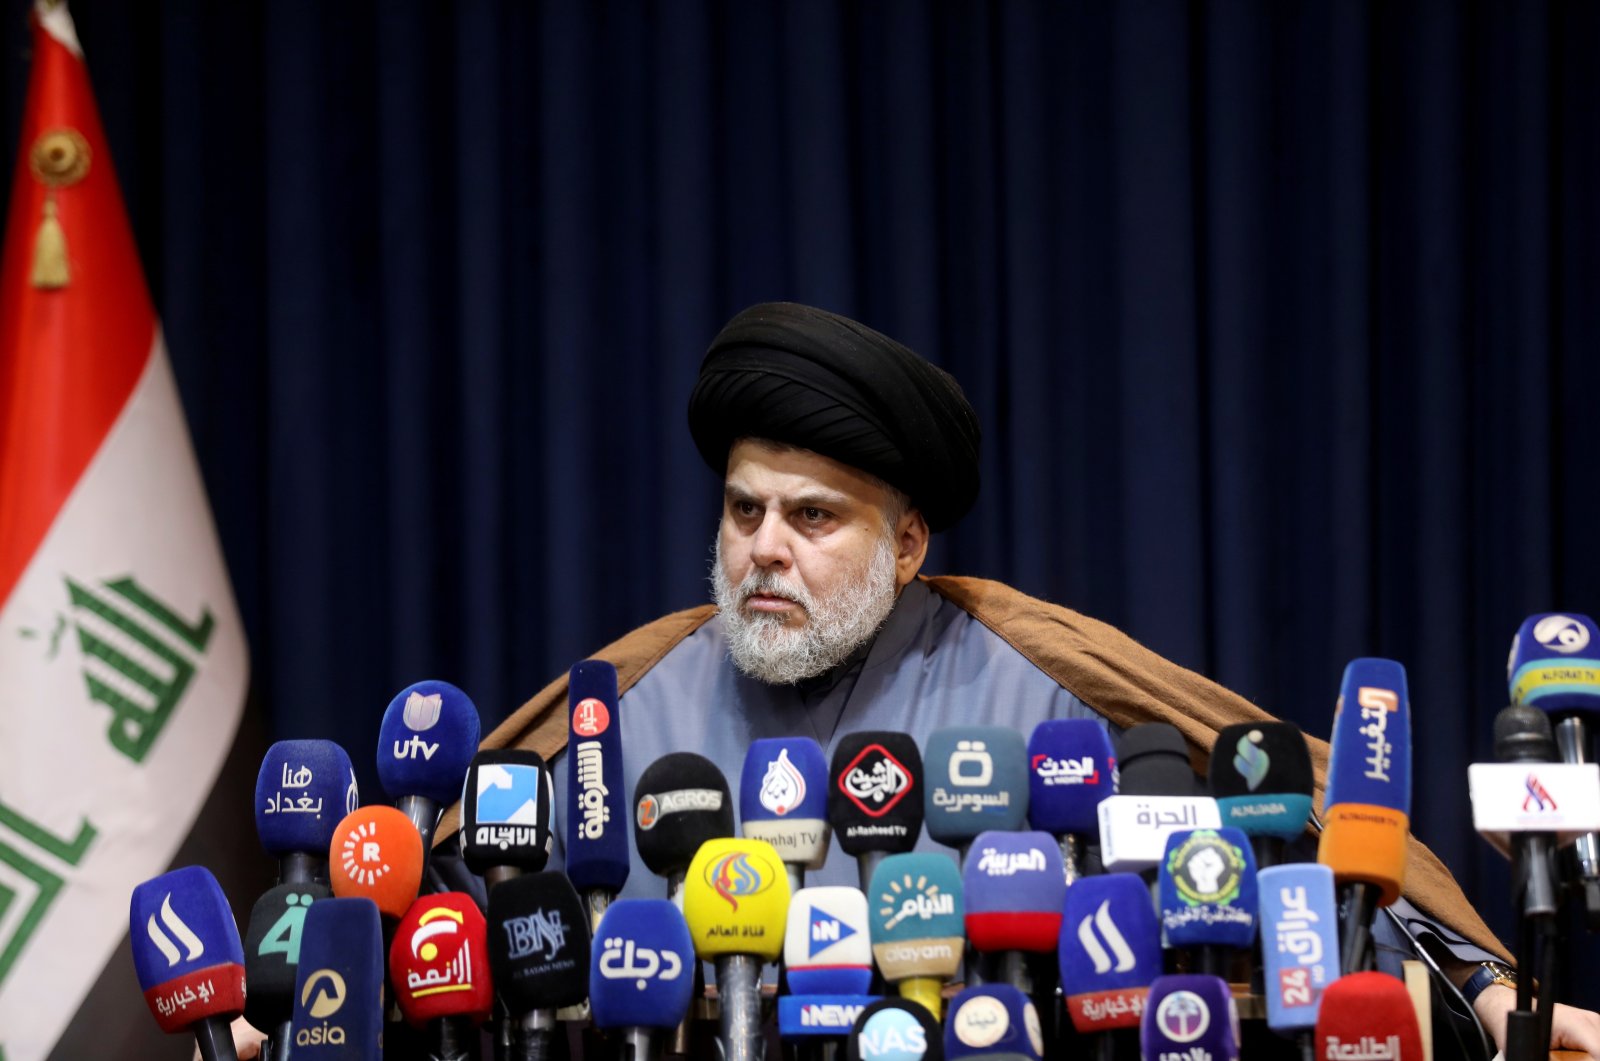 Iraqi Shiite cleric Muqtada al-Sadr attends a news conference in Najaf, Iraq, Nov. 18, 2021. (Reuters Photo)